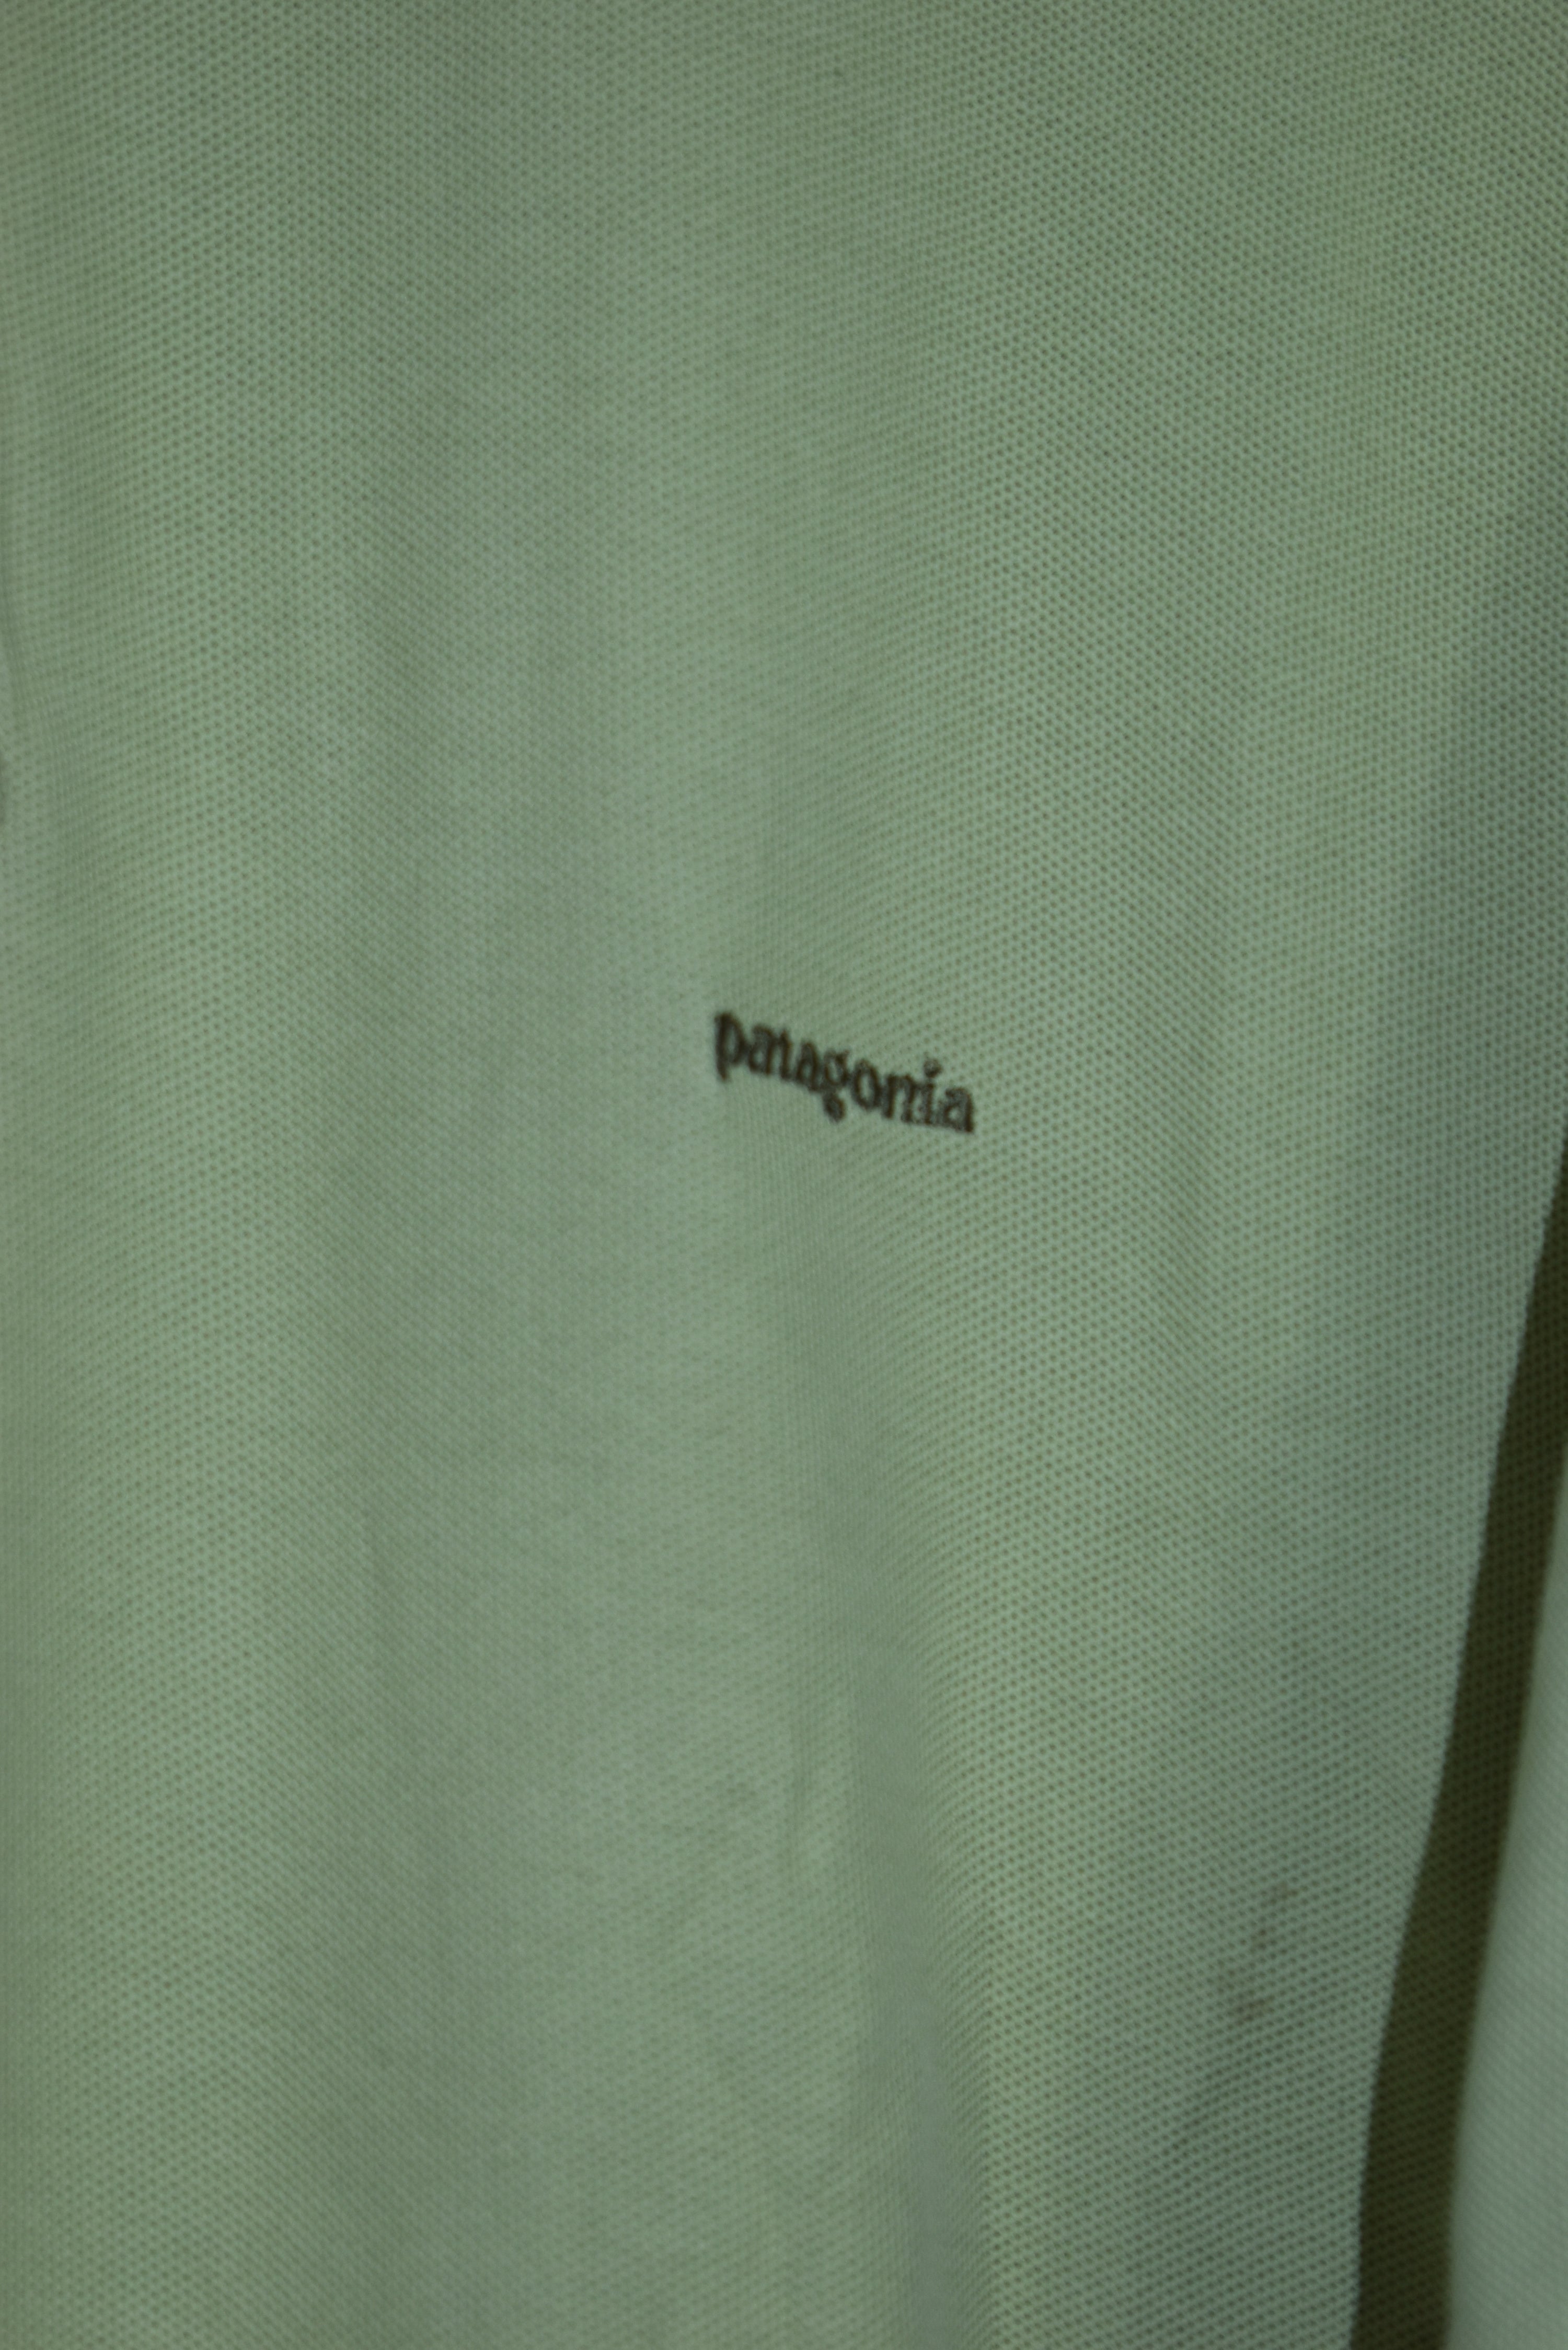 Vintage Patagonia Embroidered Polo Shirt XL